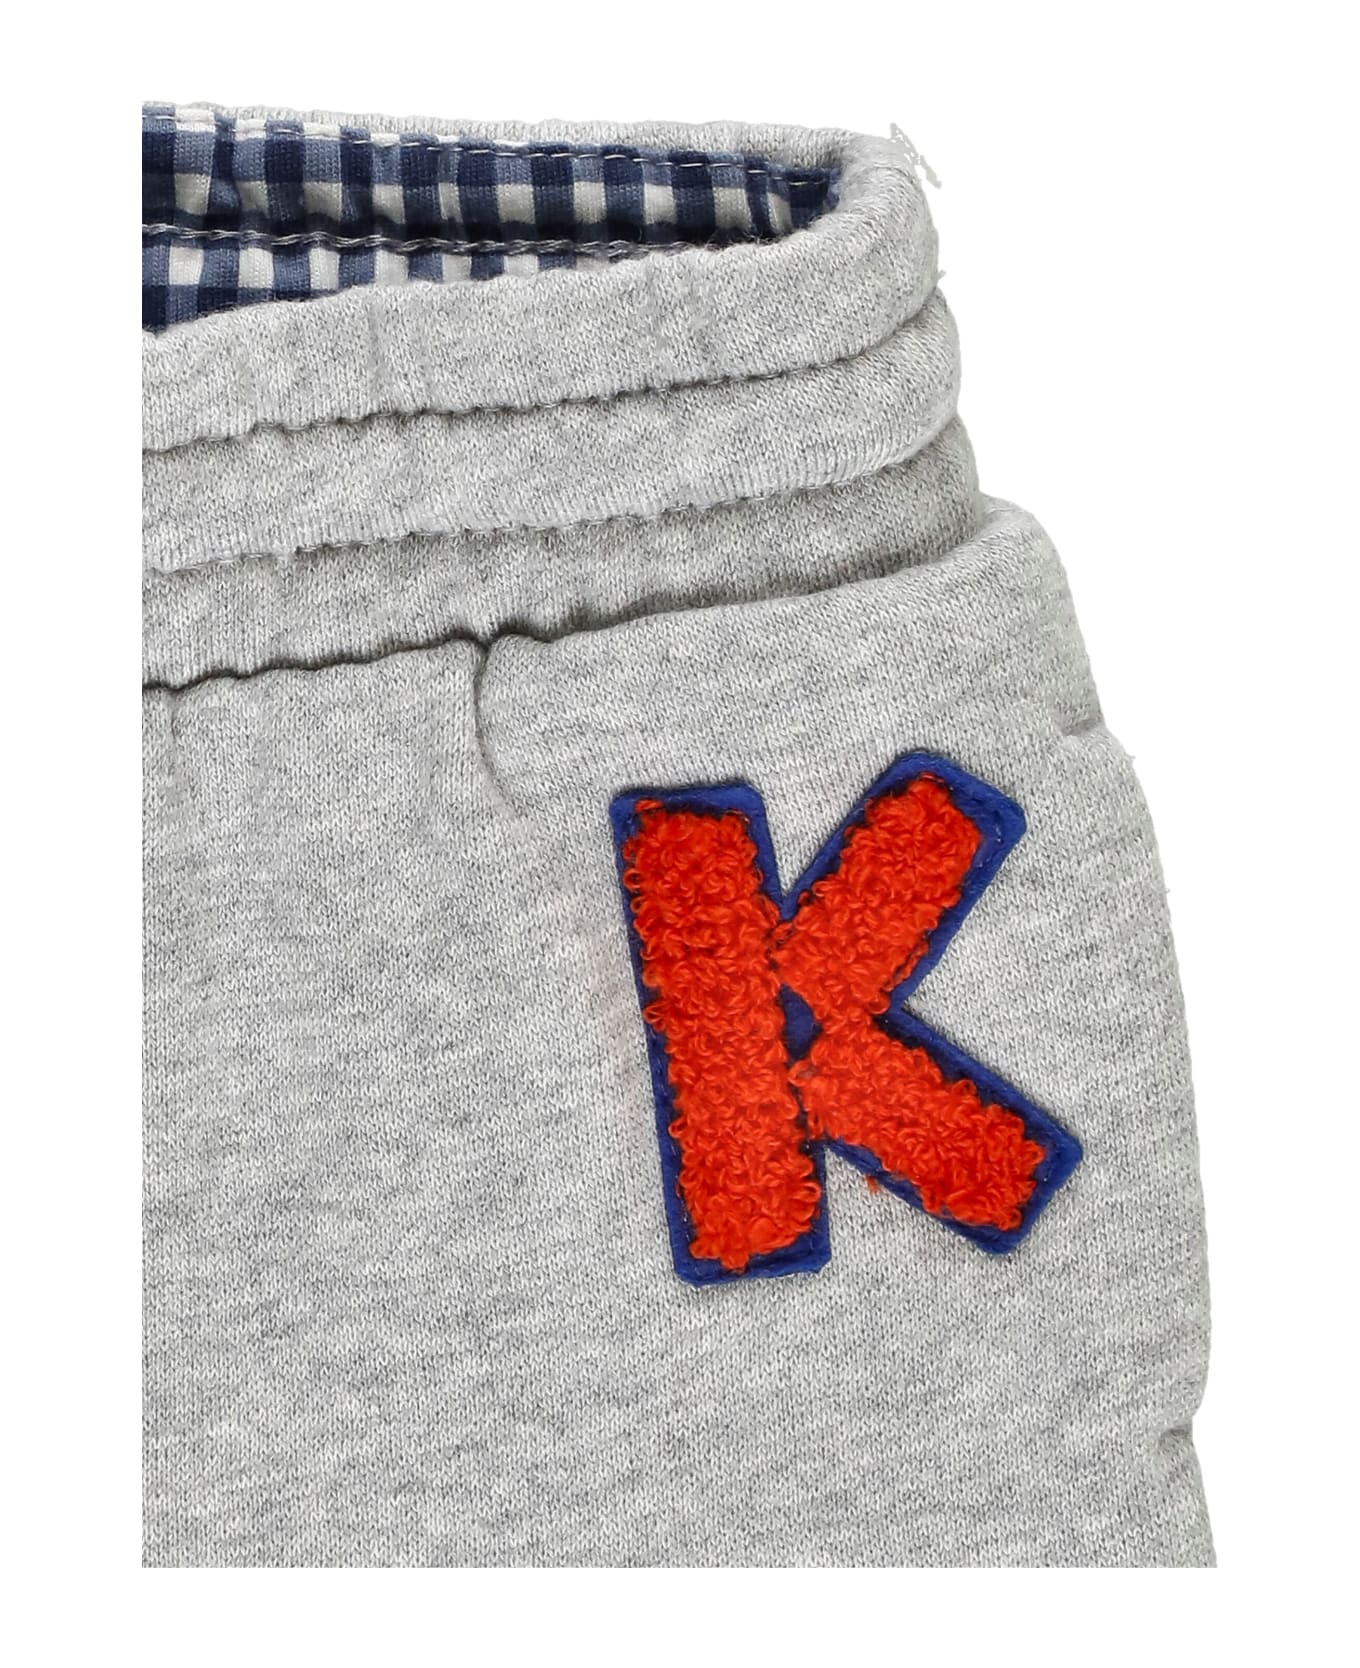 Kenzo Kids Cotton Sweatpants - Grey ボトムス